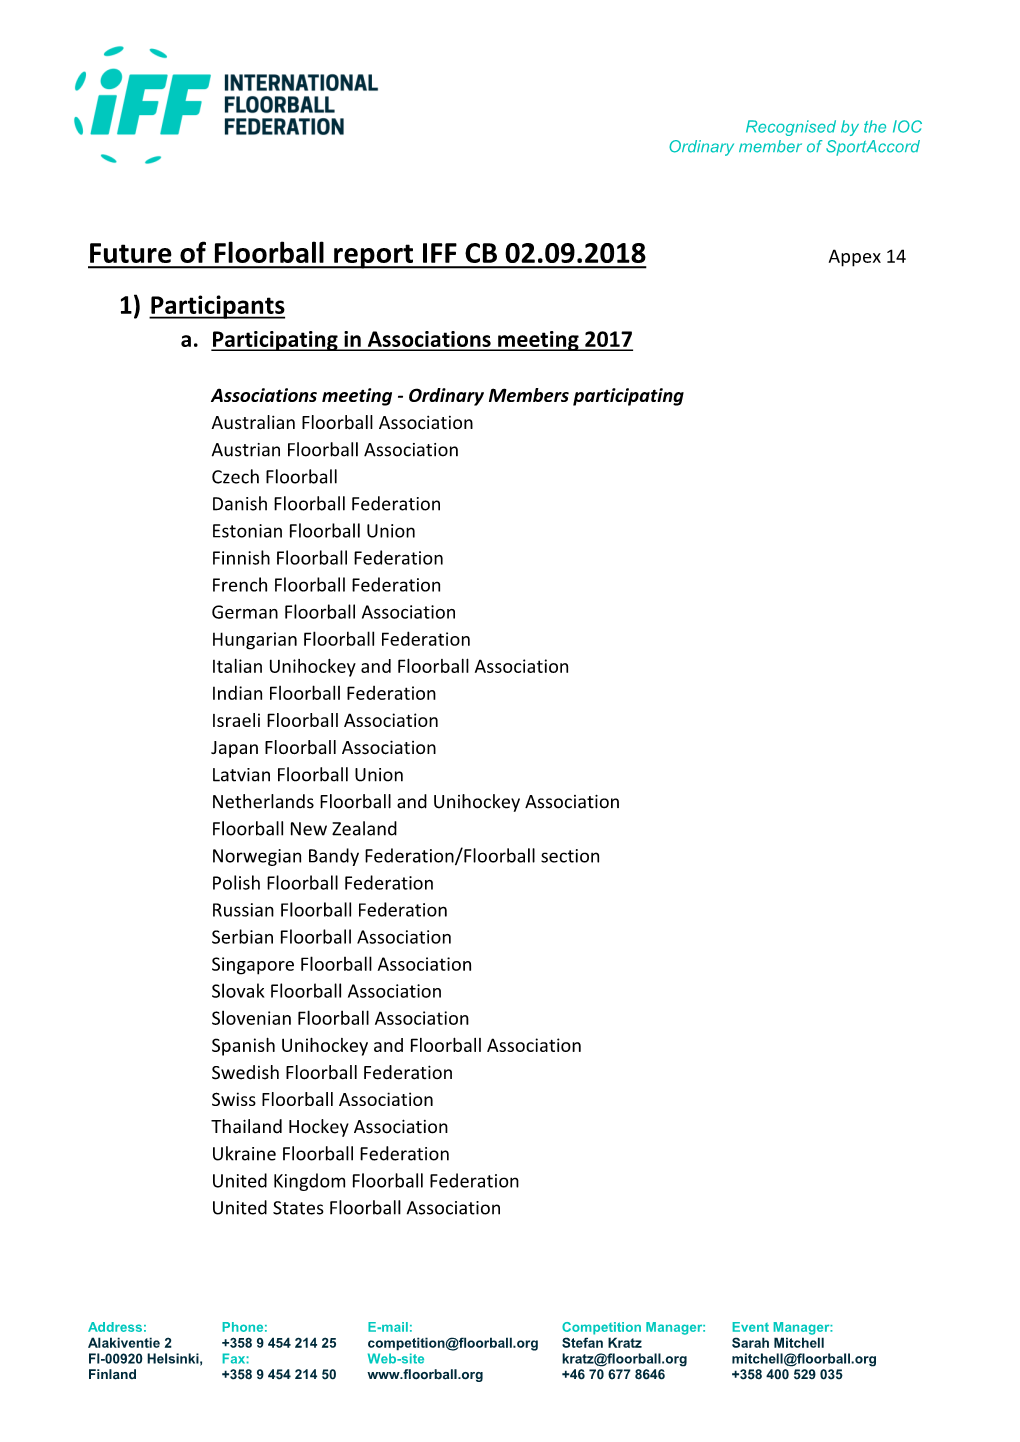 Future of Floorball Report IFF CB 02.09.2018 Appex 14 1) Participants A